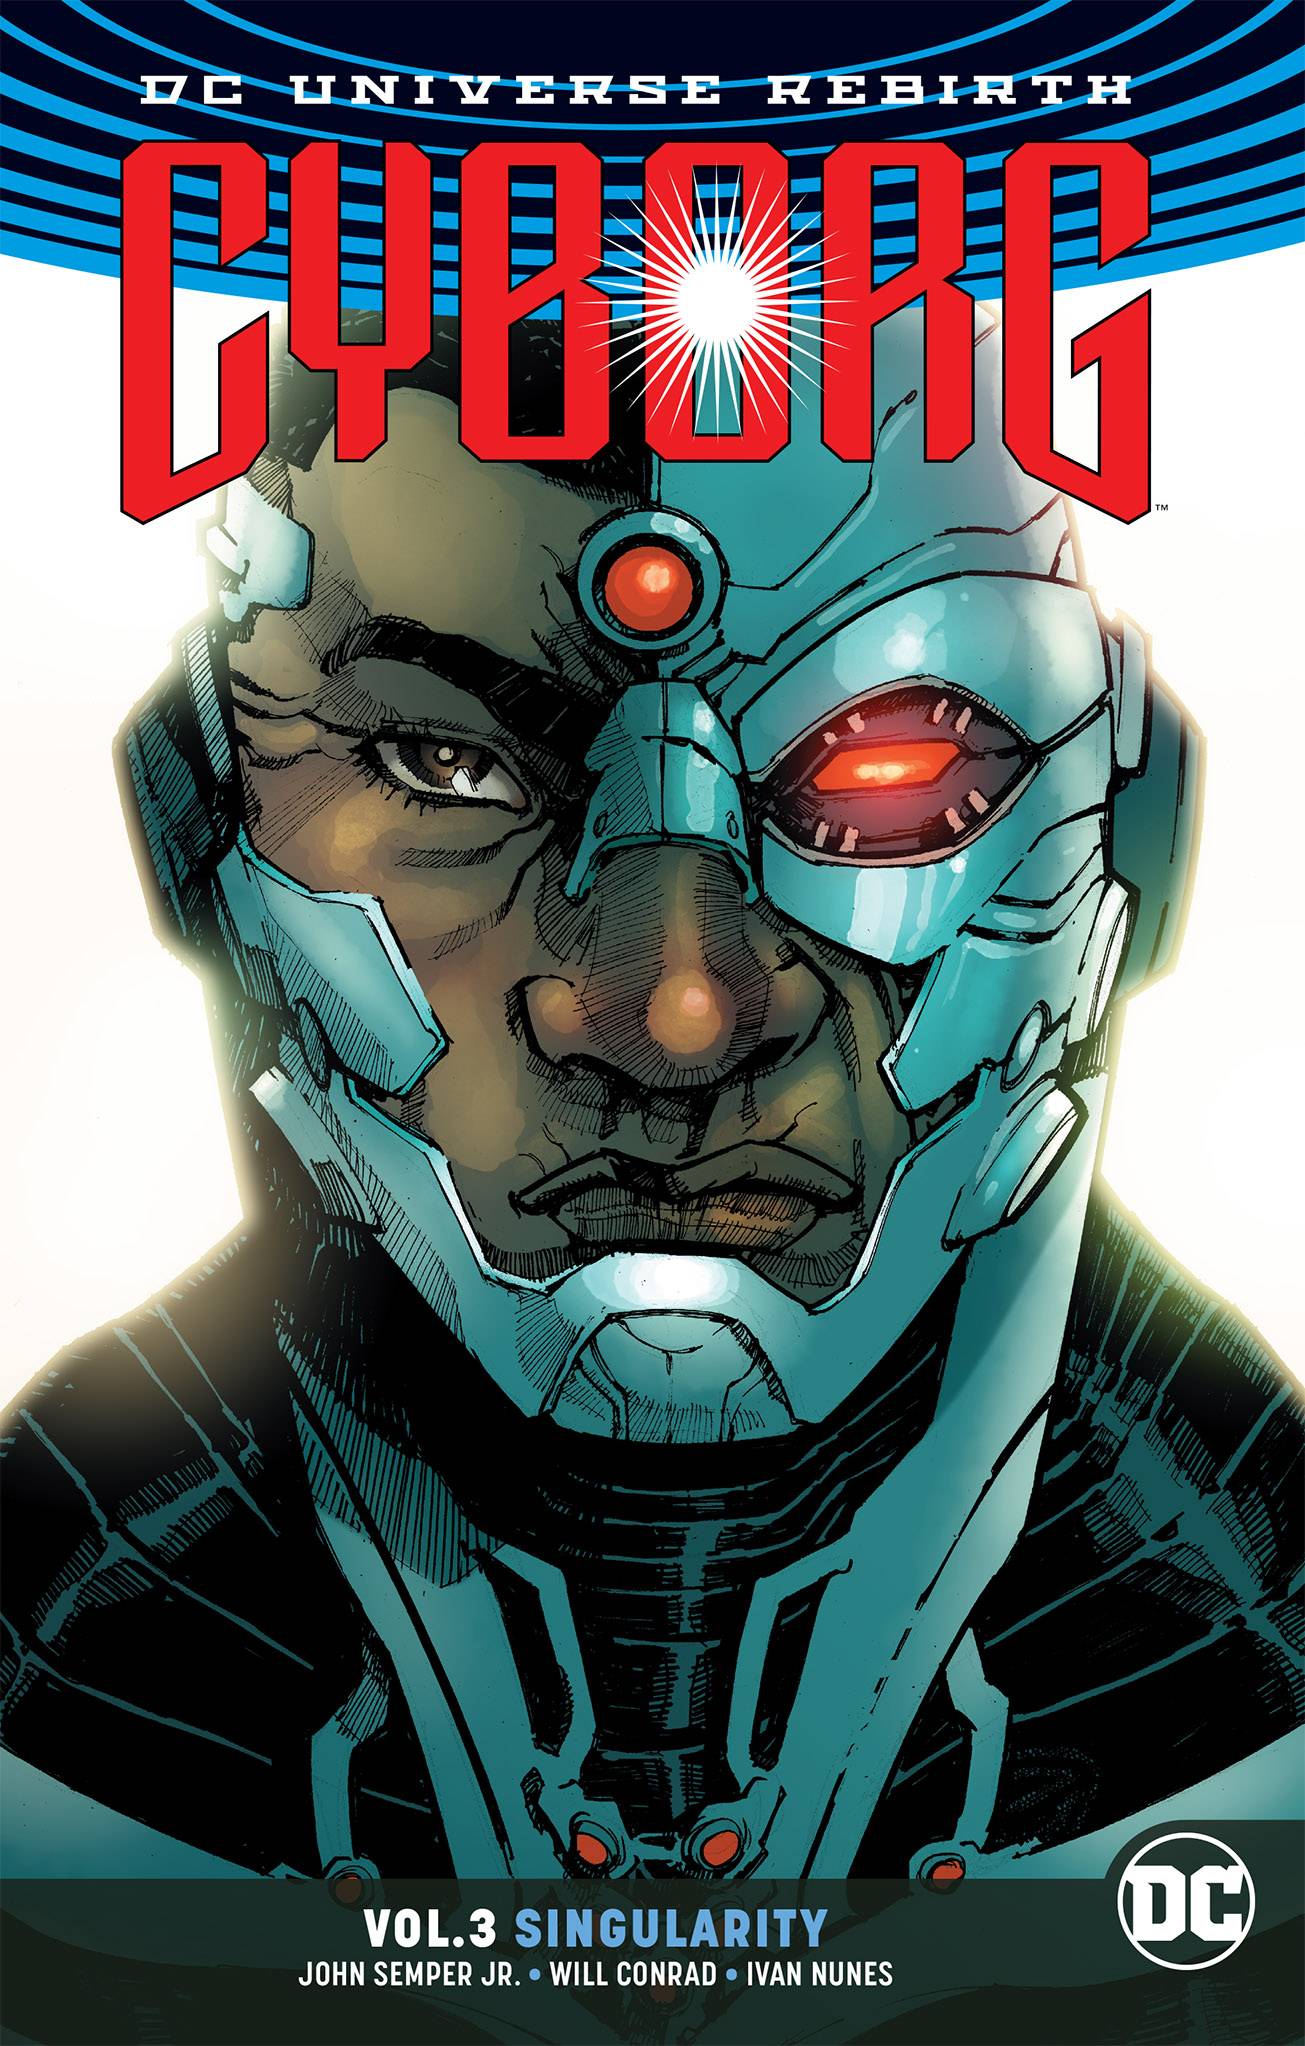 Cyborg Graphic Novel Volume 3 Singularity Rebirth